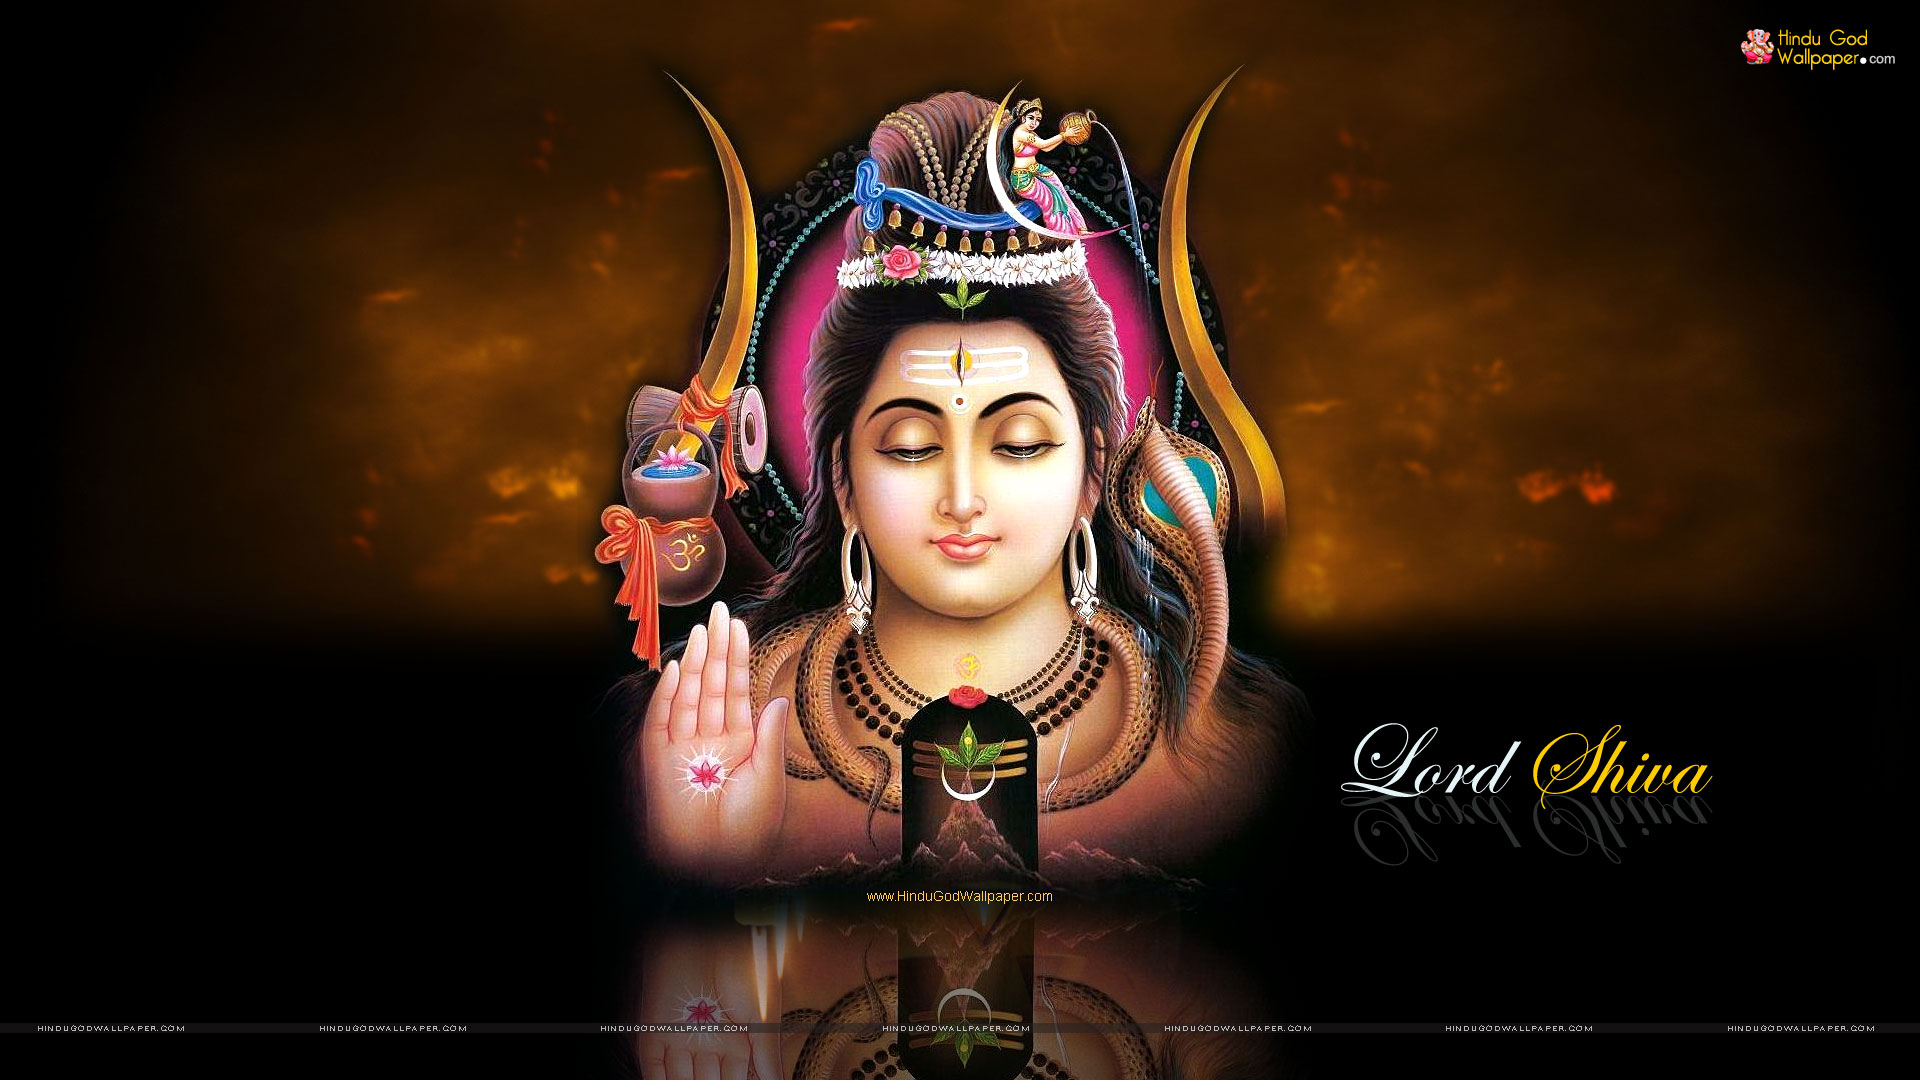 [49+] Lord Shiva HD Wallpapers | WallpaperSafari.com